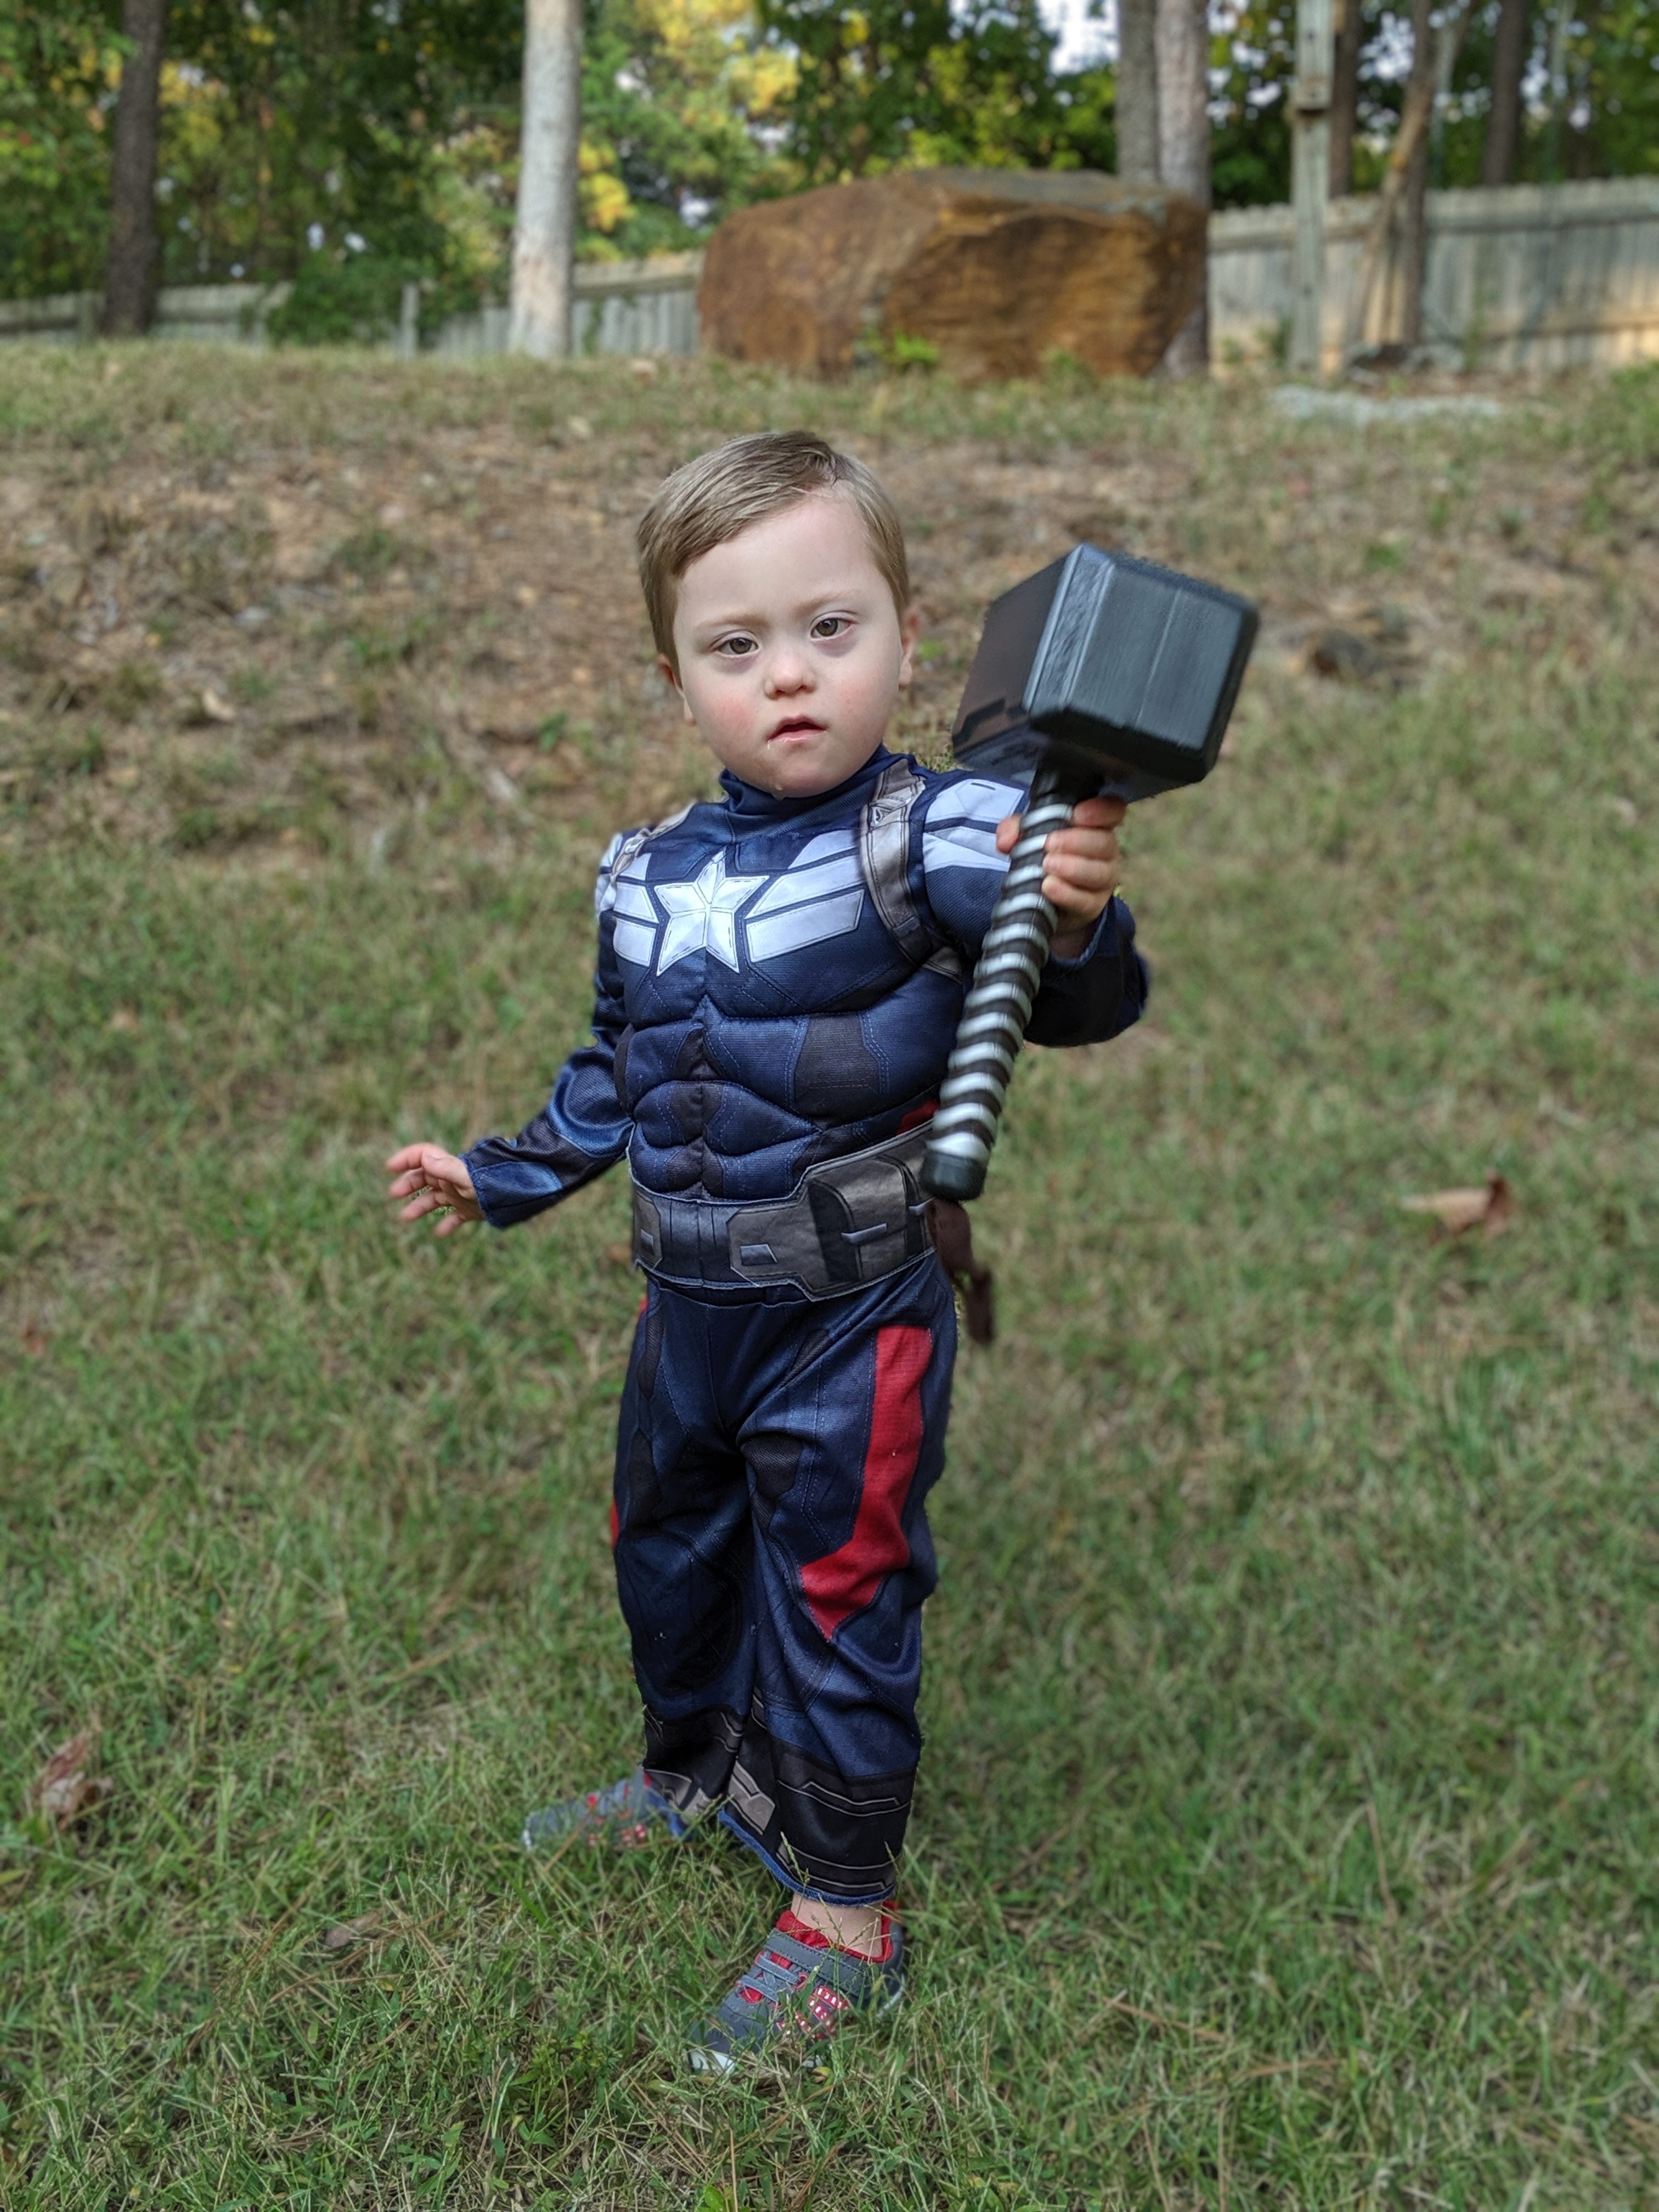 Adam's son dressed as Captain America holding Thor's hammer.